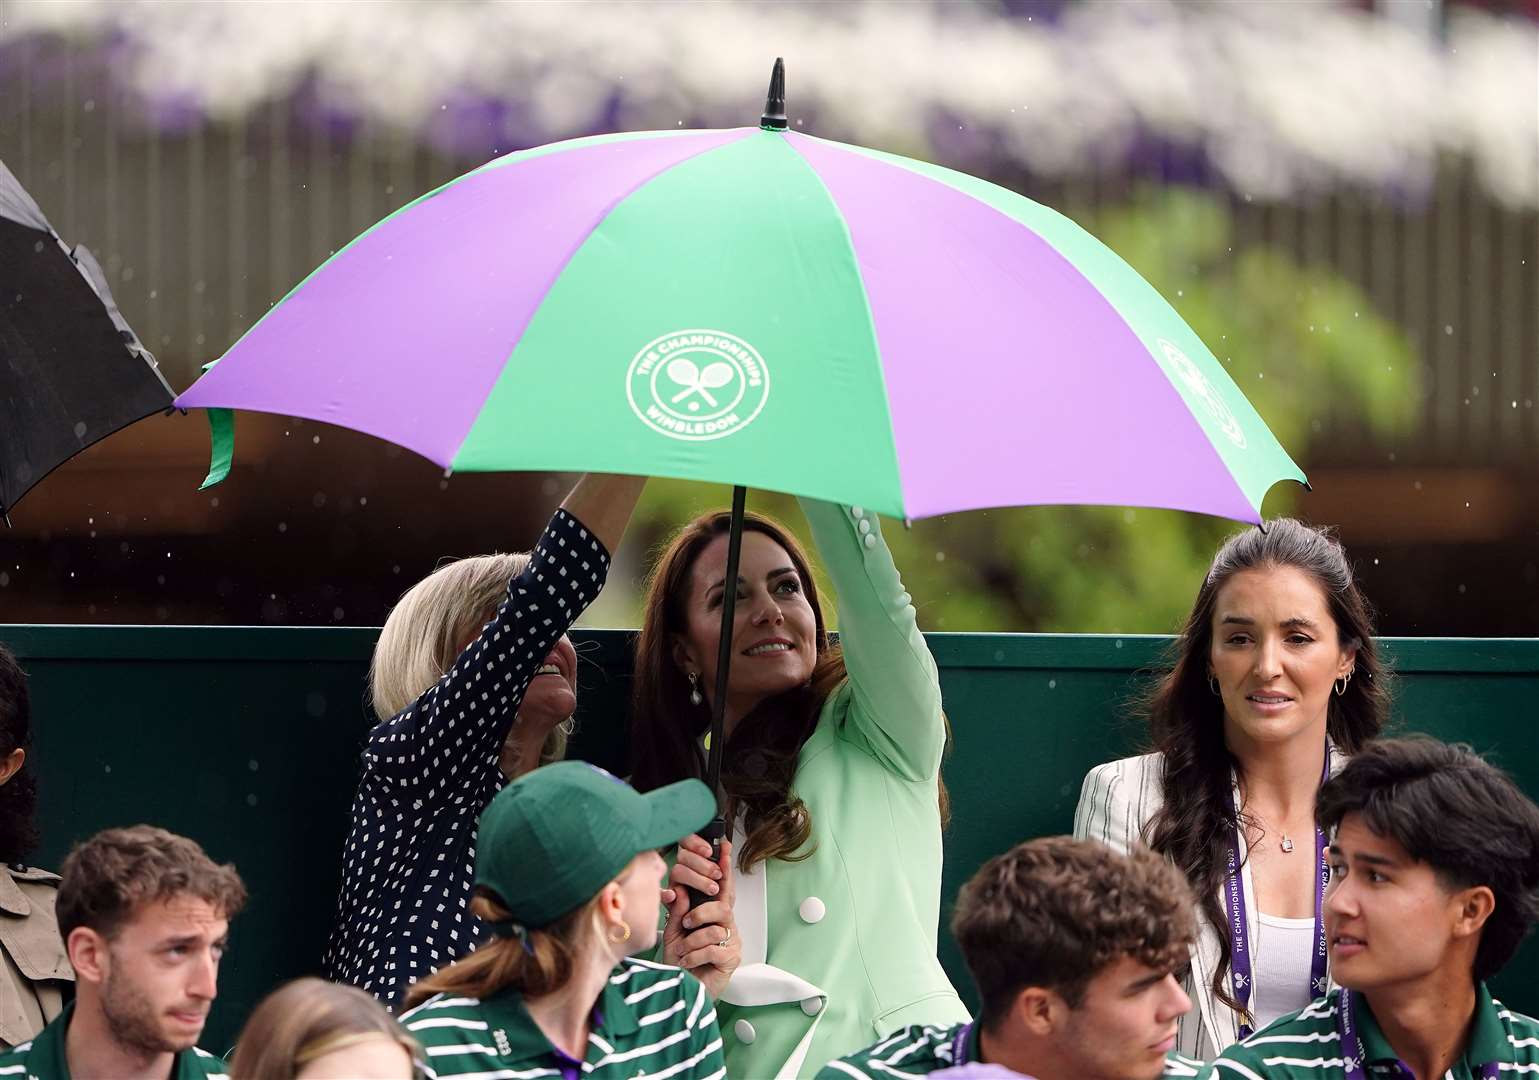 The Princess of Wales had a rainy visit to Wimbledon last week (Zac Goodwin/PA)